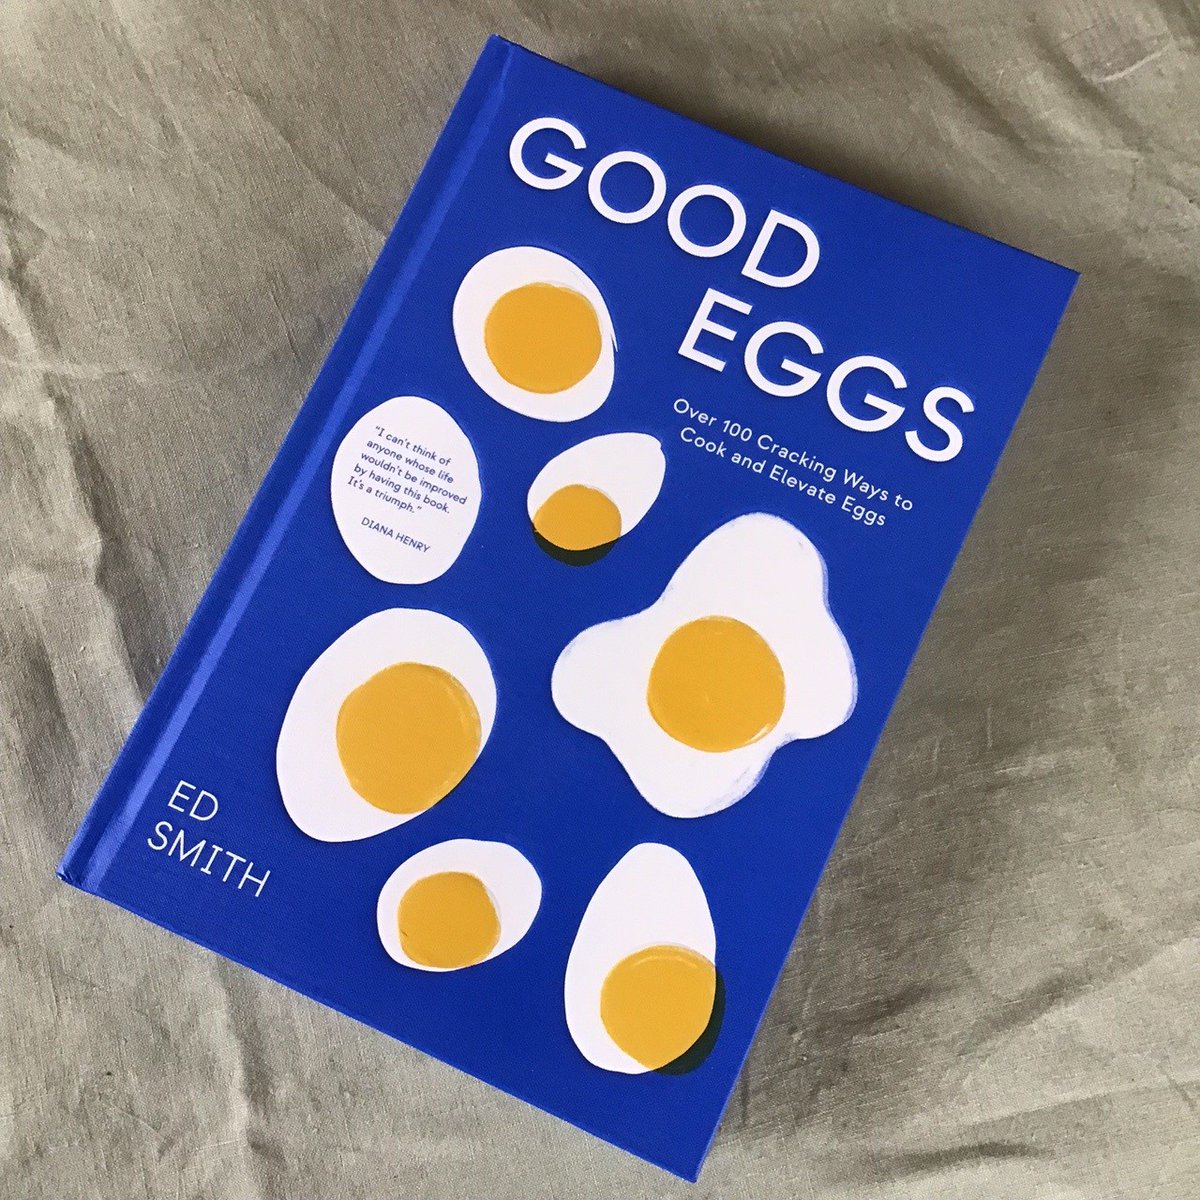 Good egg @rocketandsquash's new book Good Eggs is a cracker netherton-foundry.co.uk/Ed-Smith